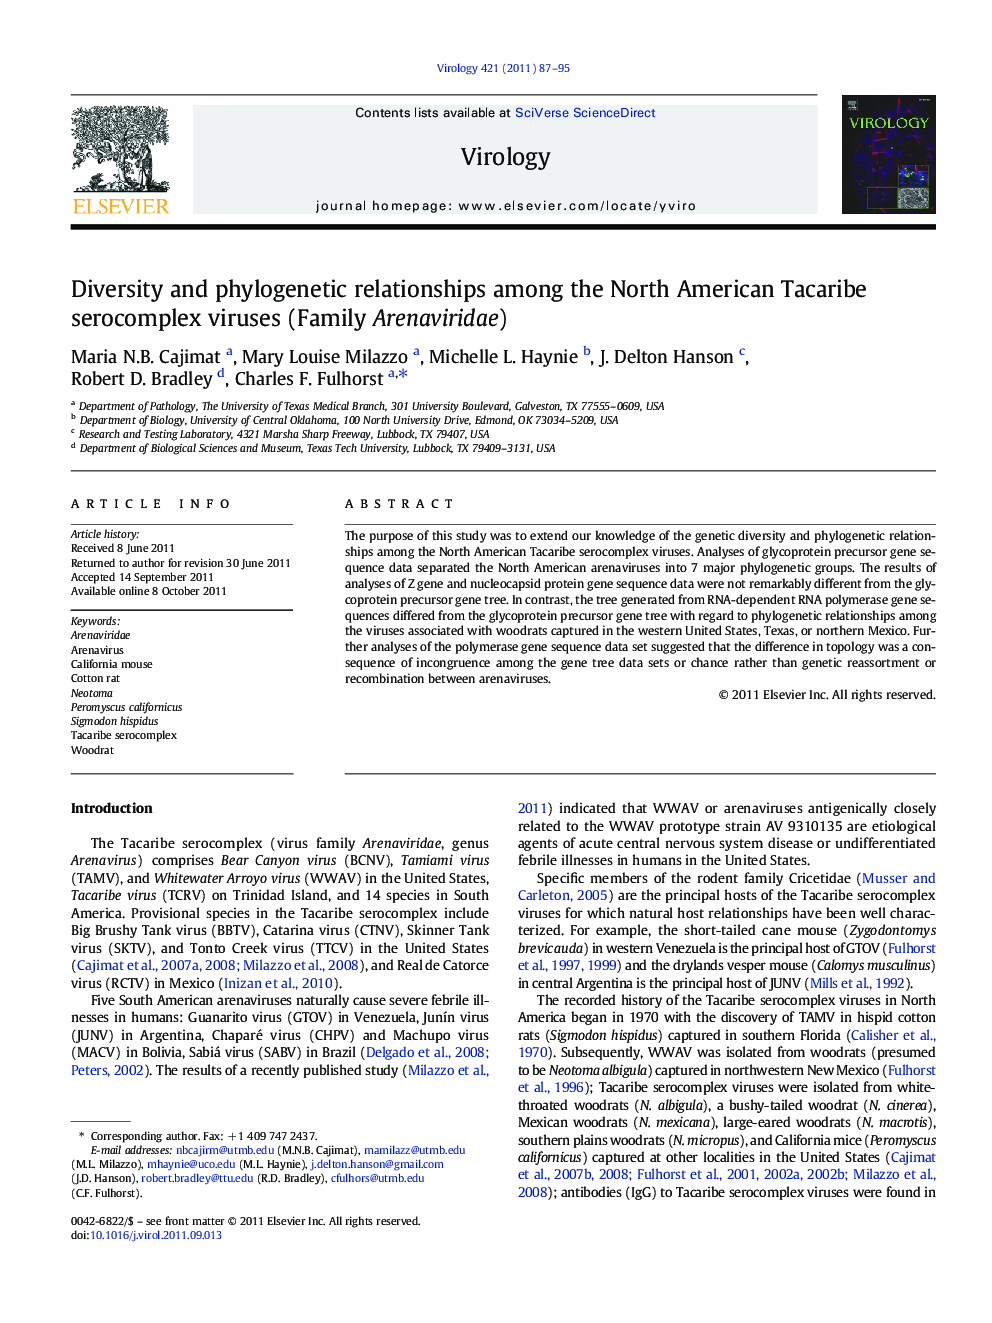 Diversity and phylogenetic relationships among the North American Tacaribe serocomplex viruses (Family Arenaviridae)